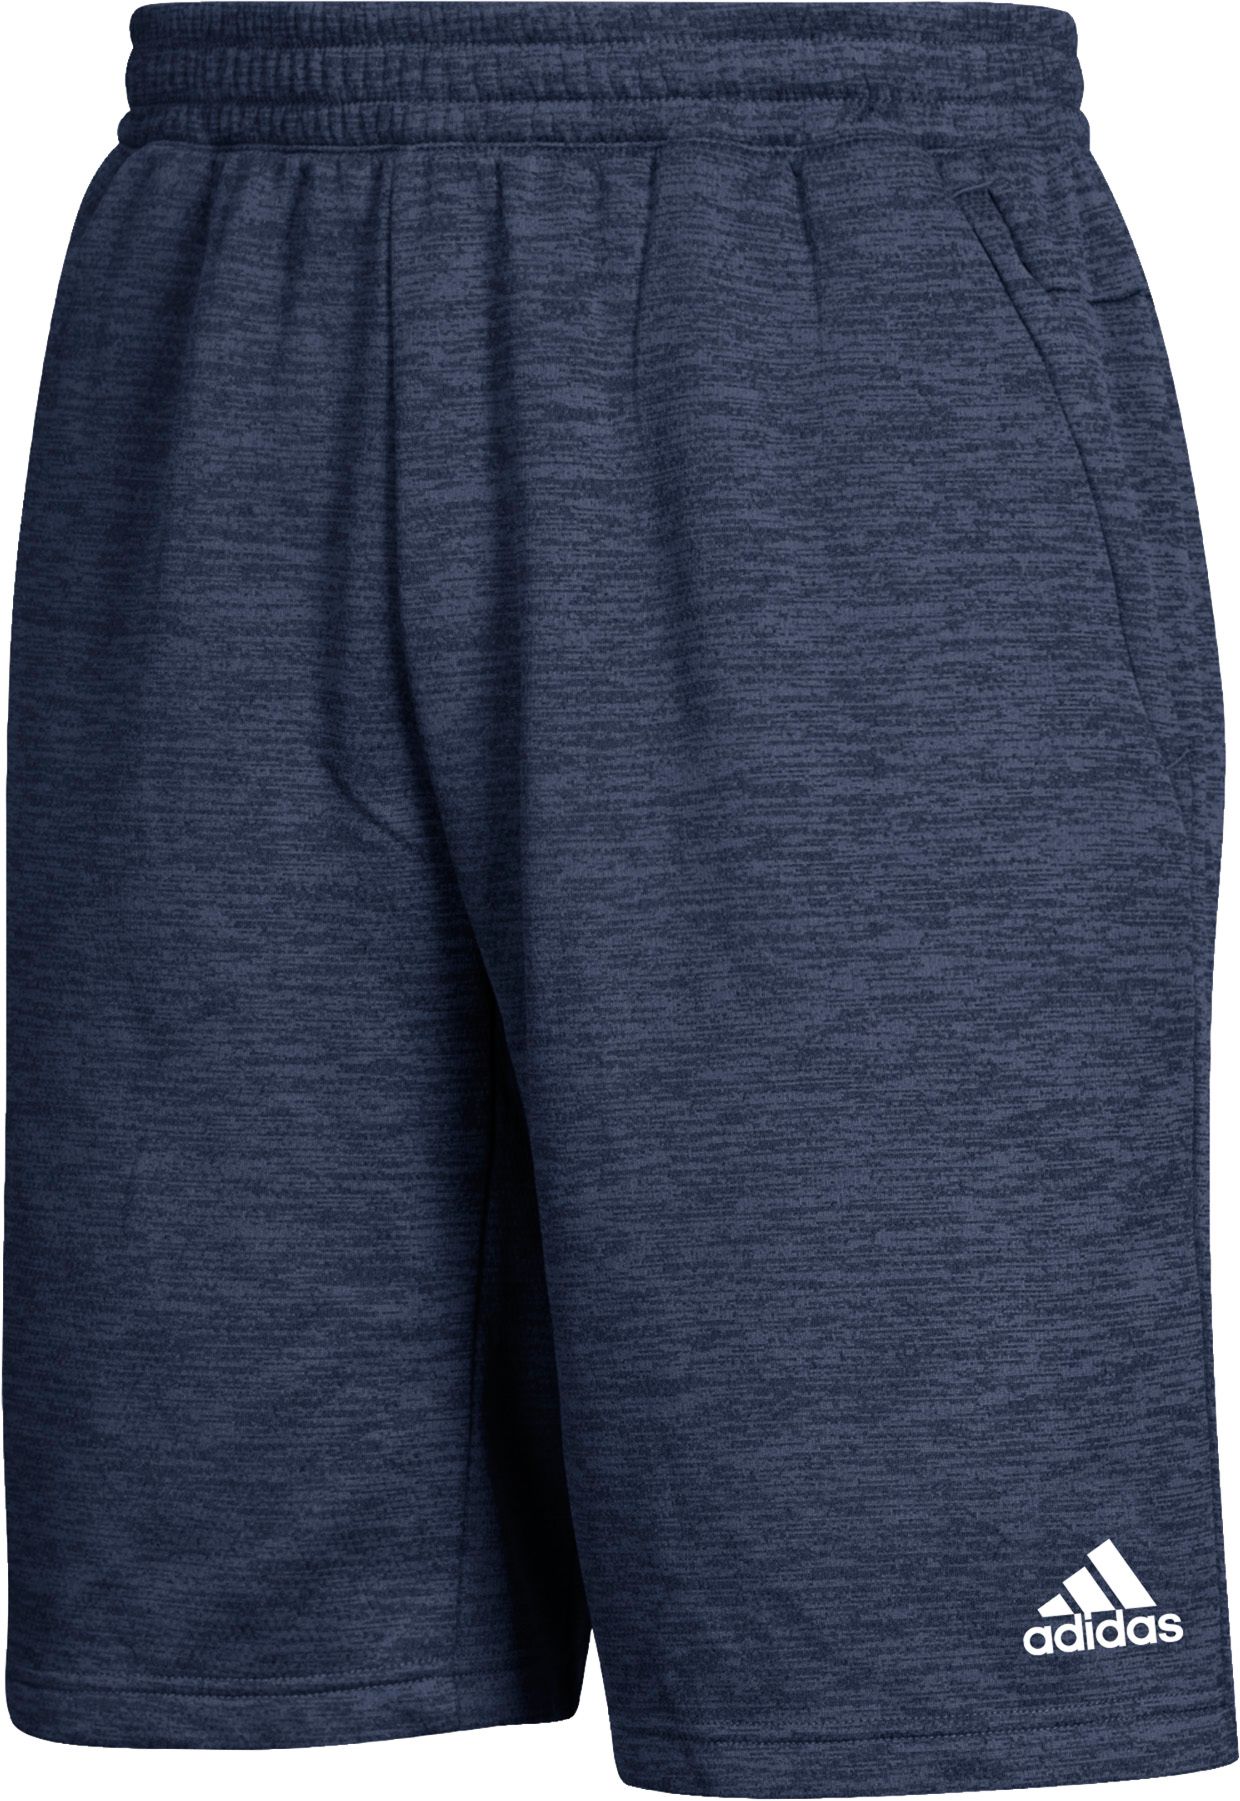 adidas navy fleece shorts